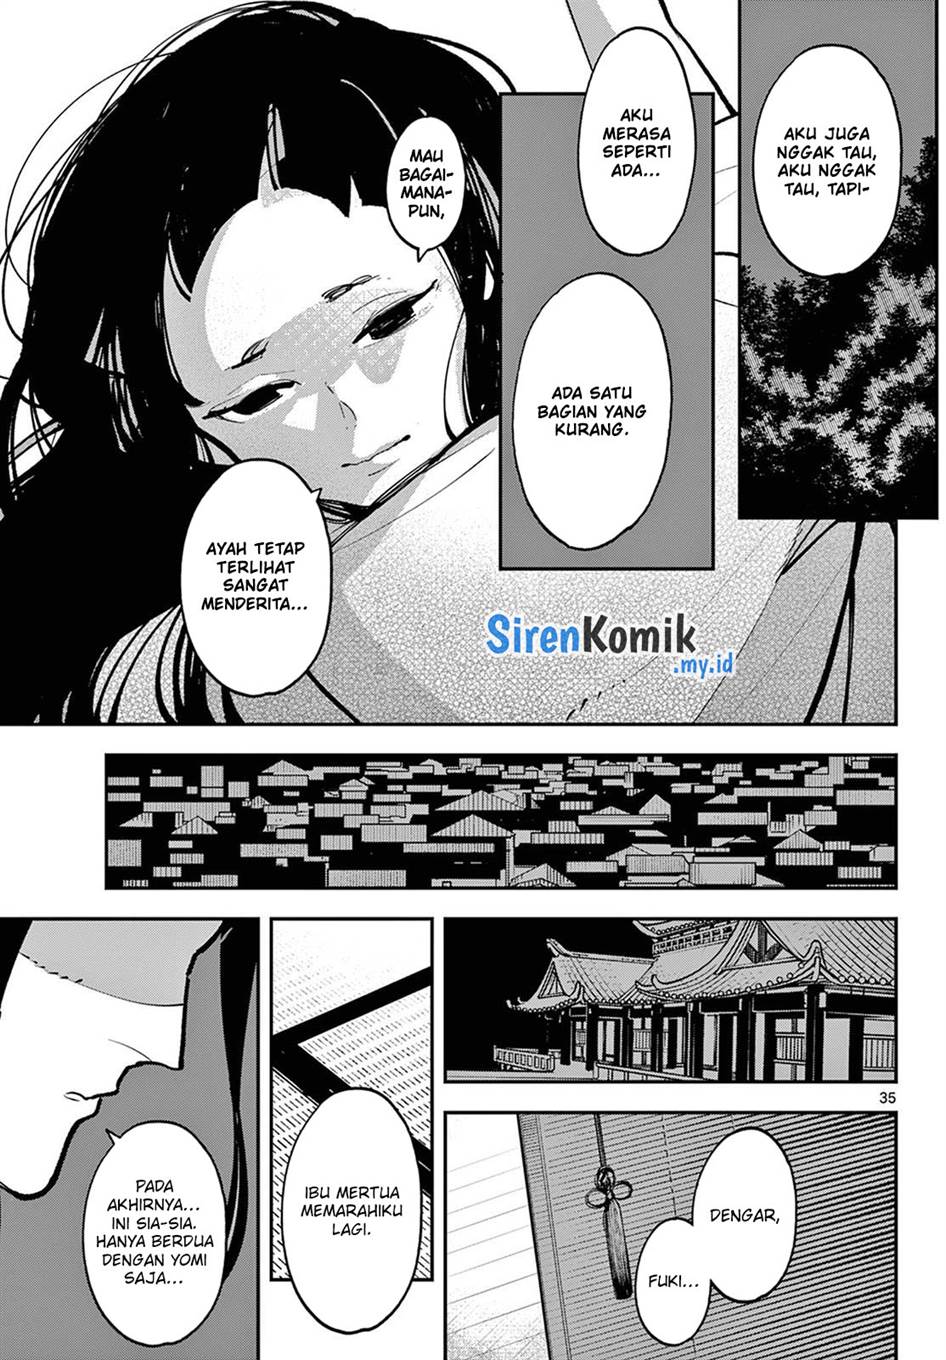 Ninkyou Tensei: Isekai no Yakuzahime Chapter 43